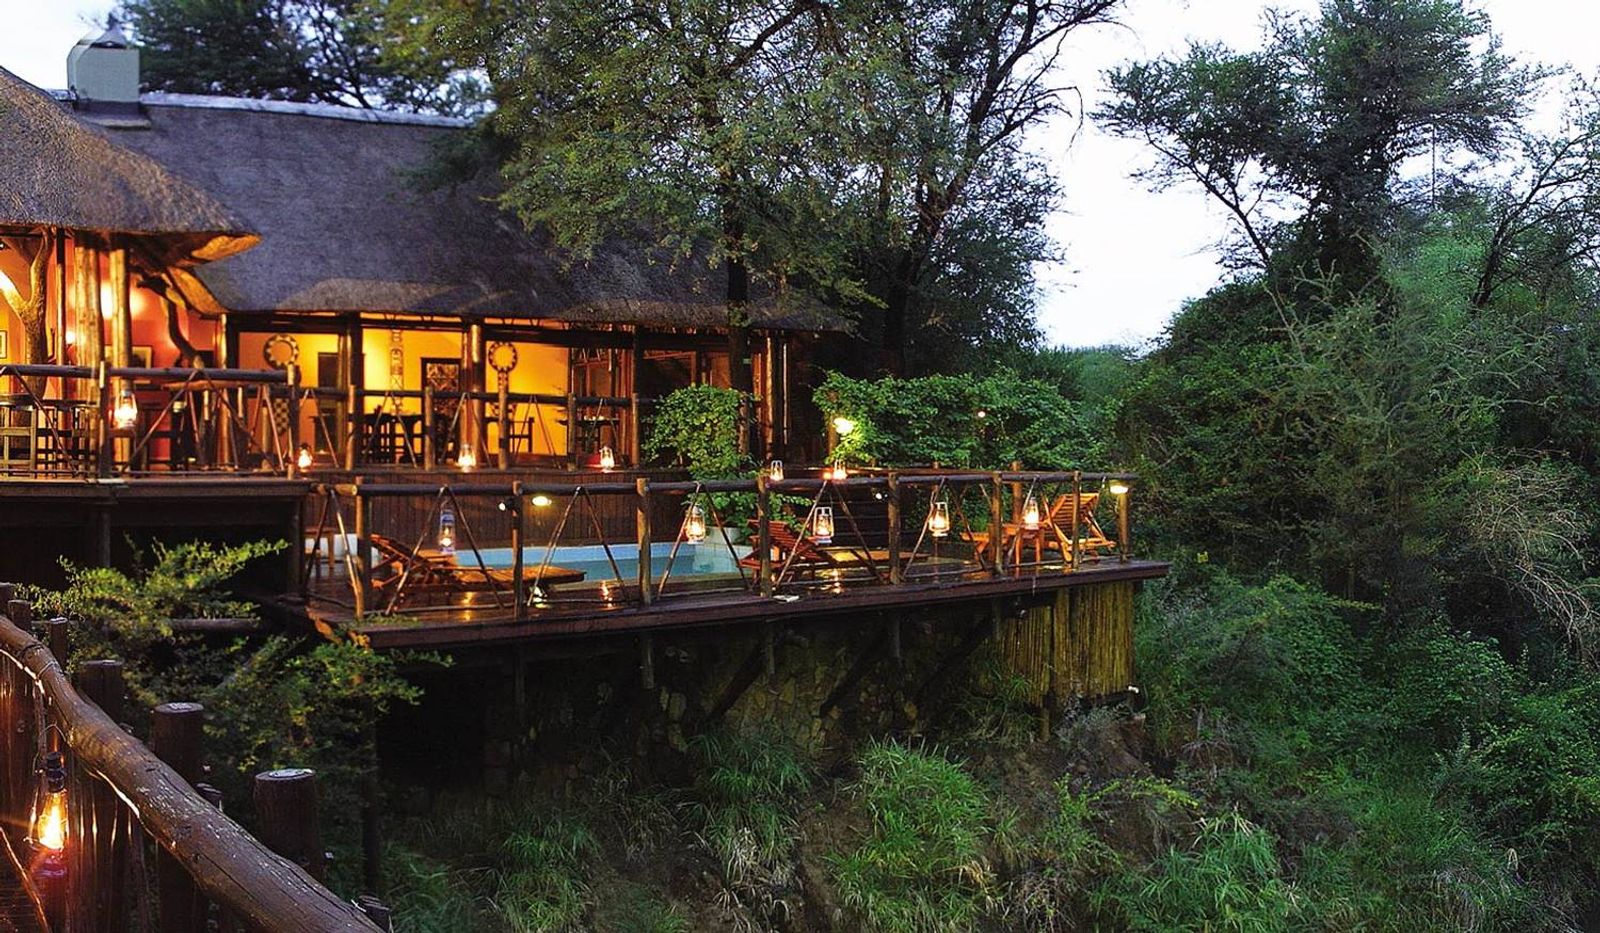 Madikwe River Lodge